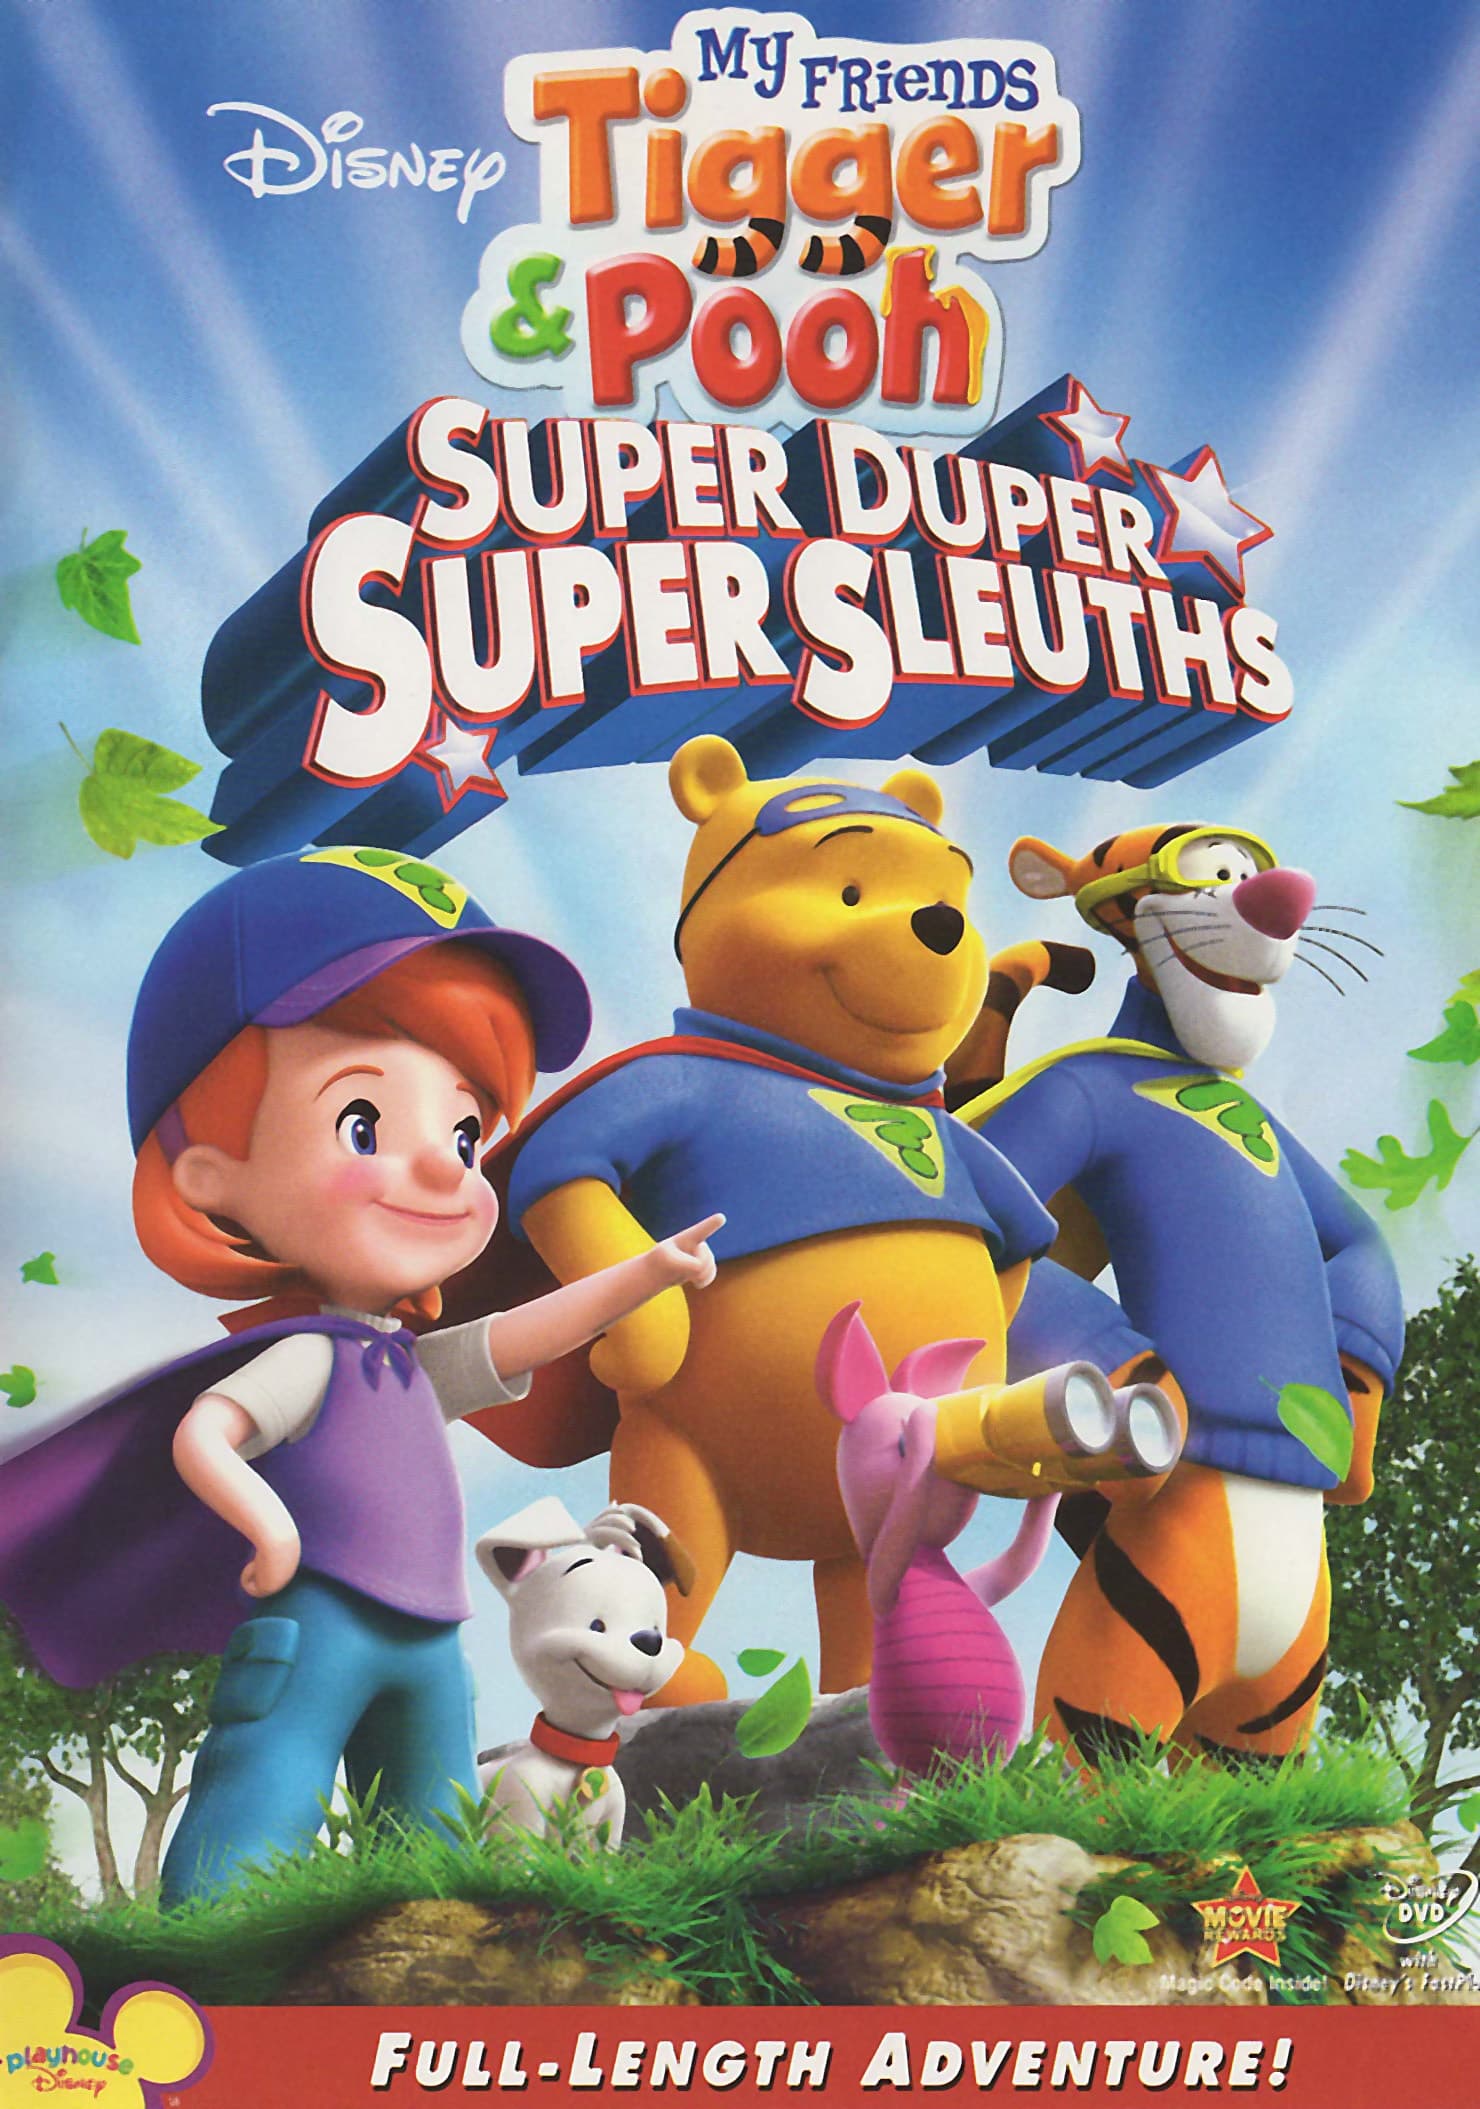 My Friends Tigger & Pooh: Super Duper Super Sleuths (2007)